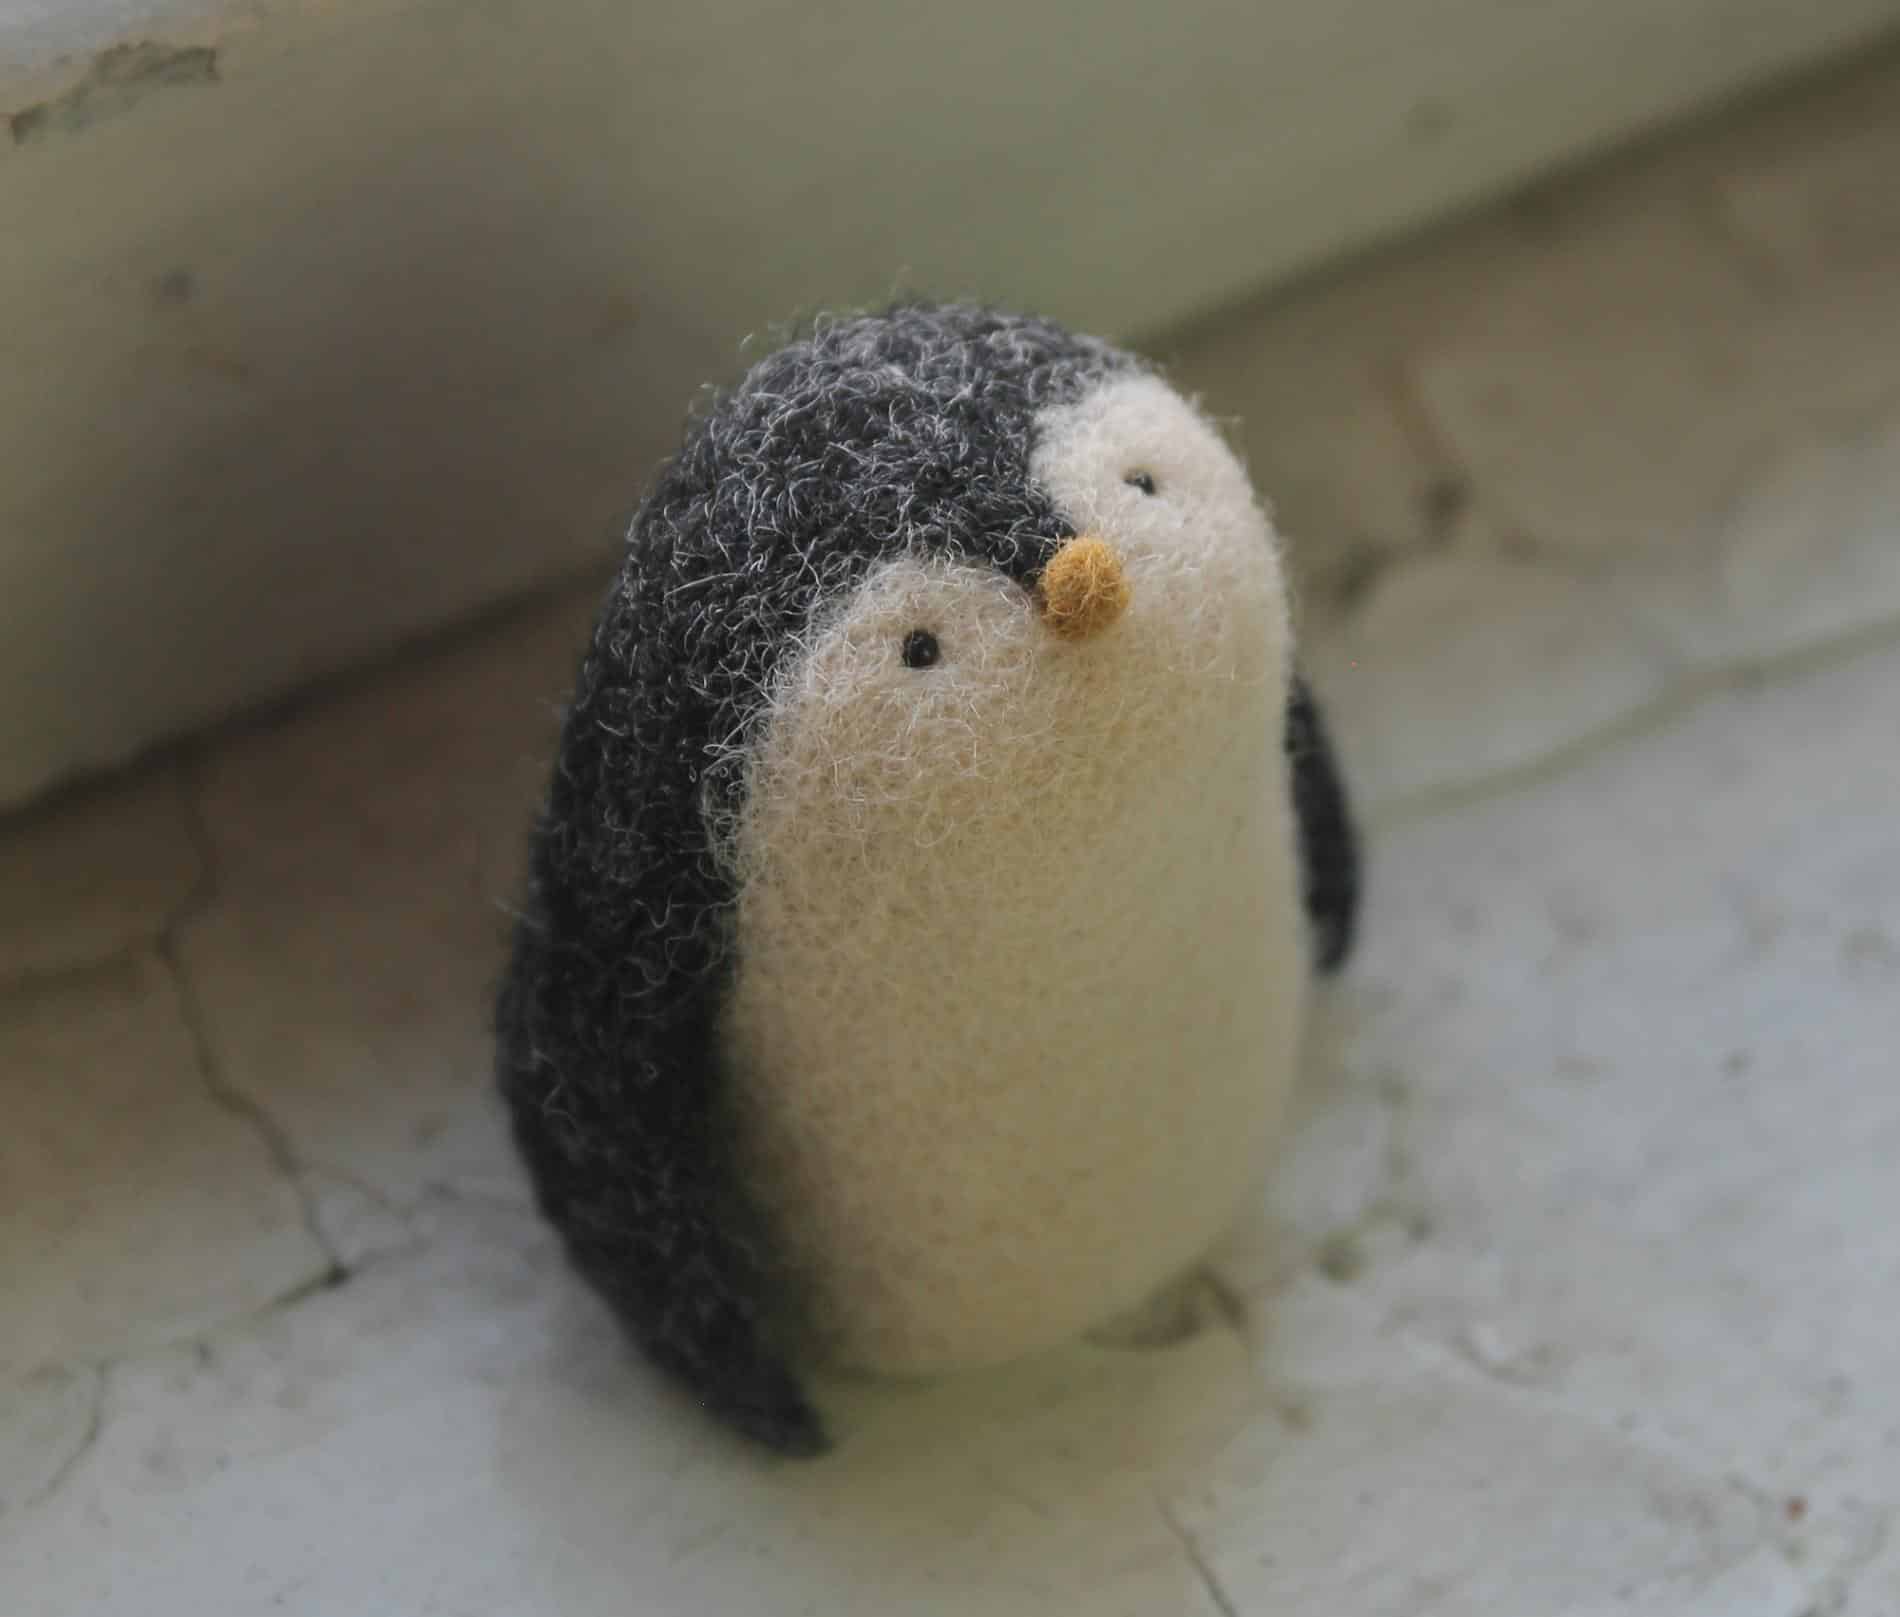 Natasya Shuljak miniaturas pinguino